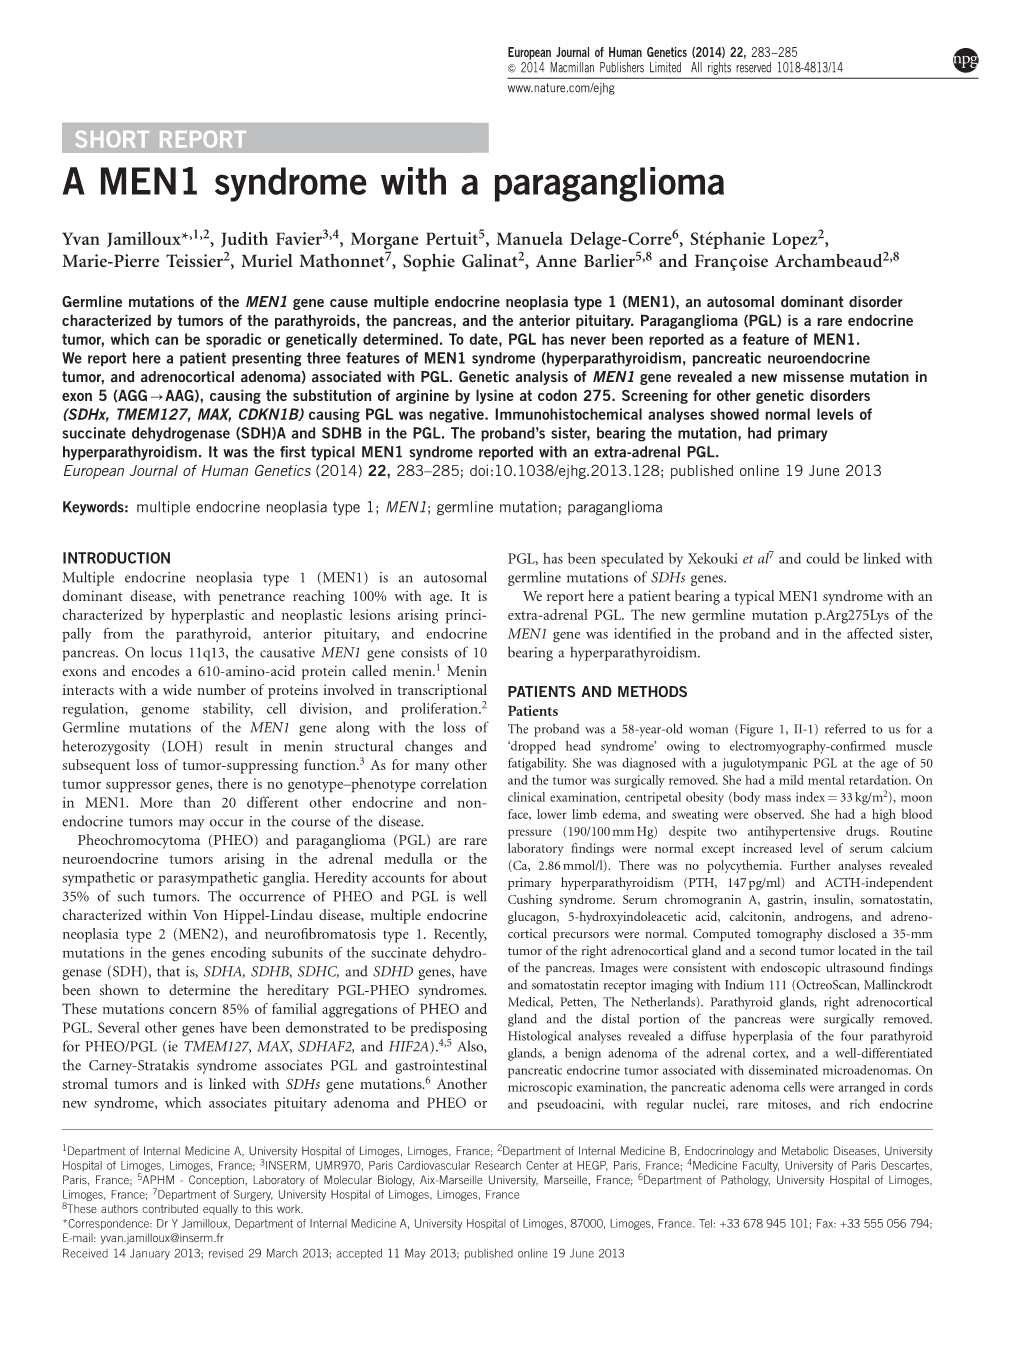 A MEN1 Syndrome with a Paraganglioma